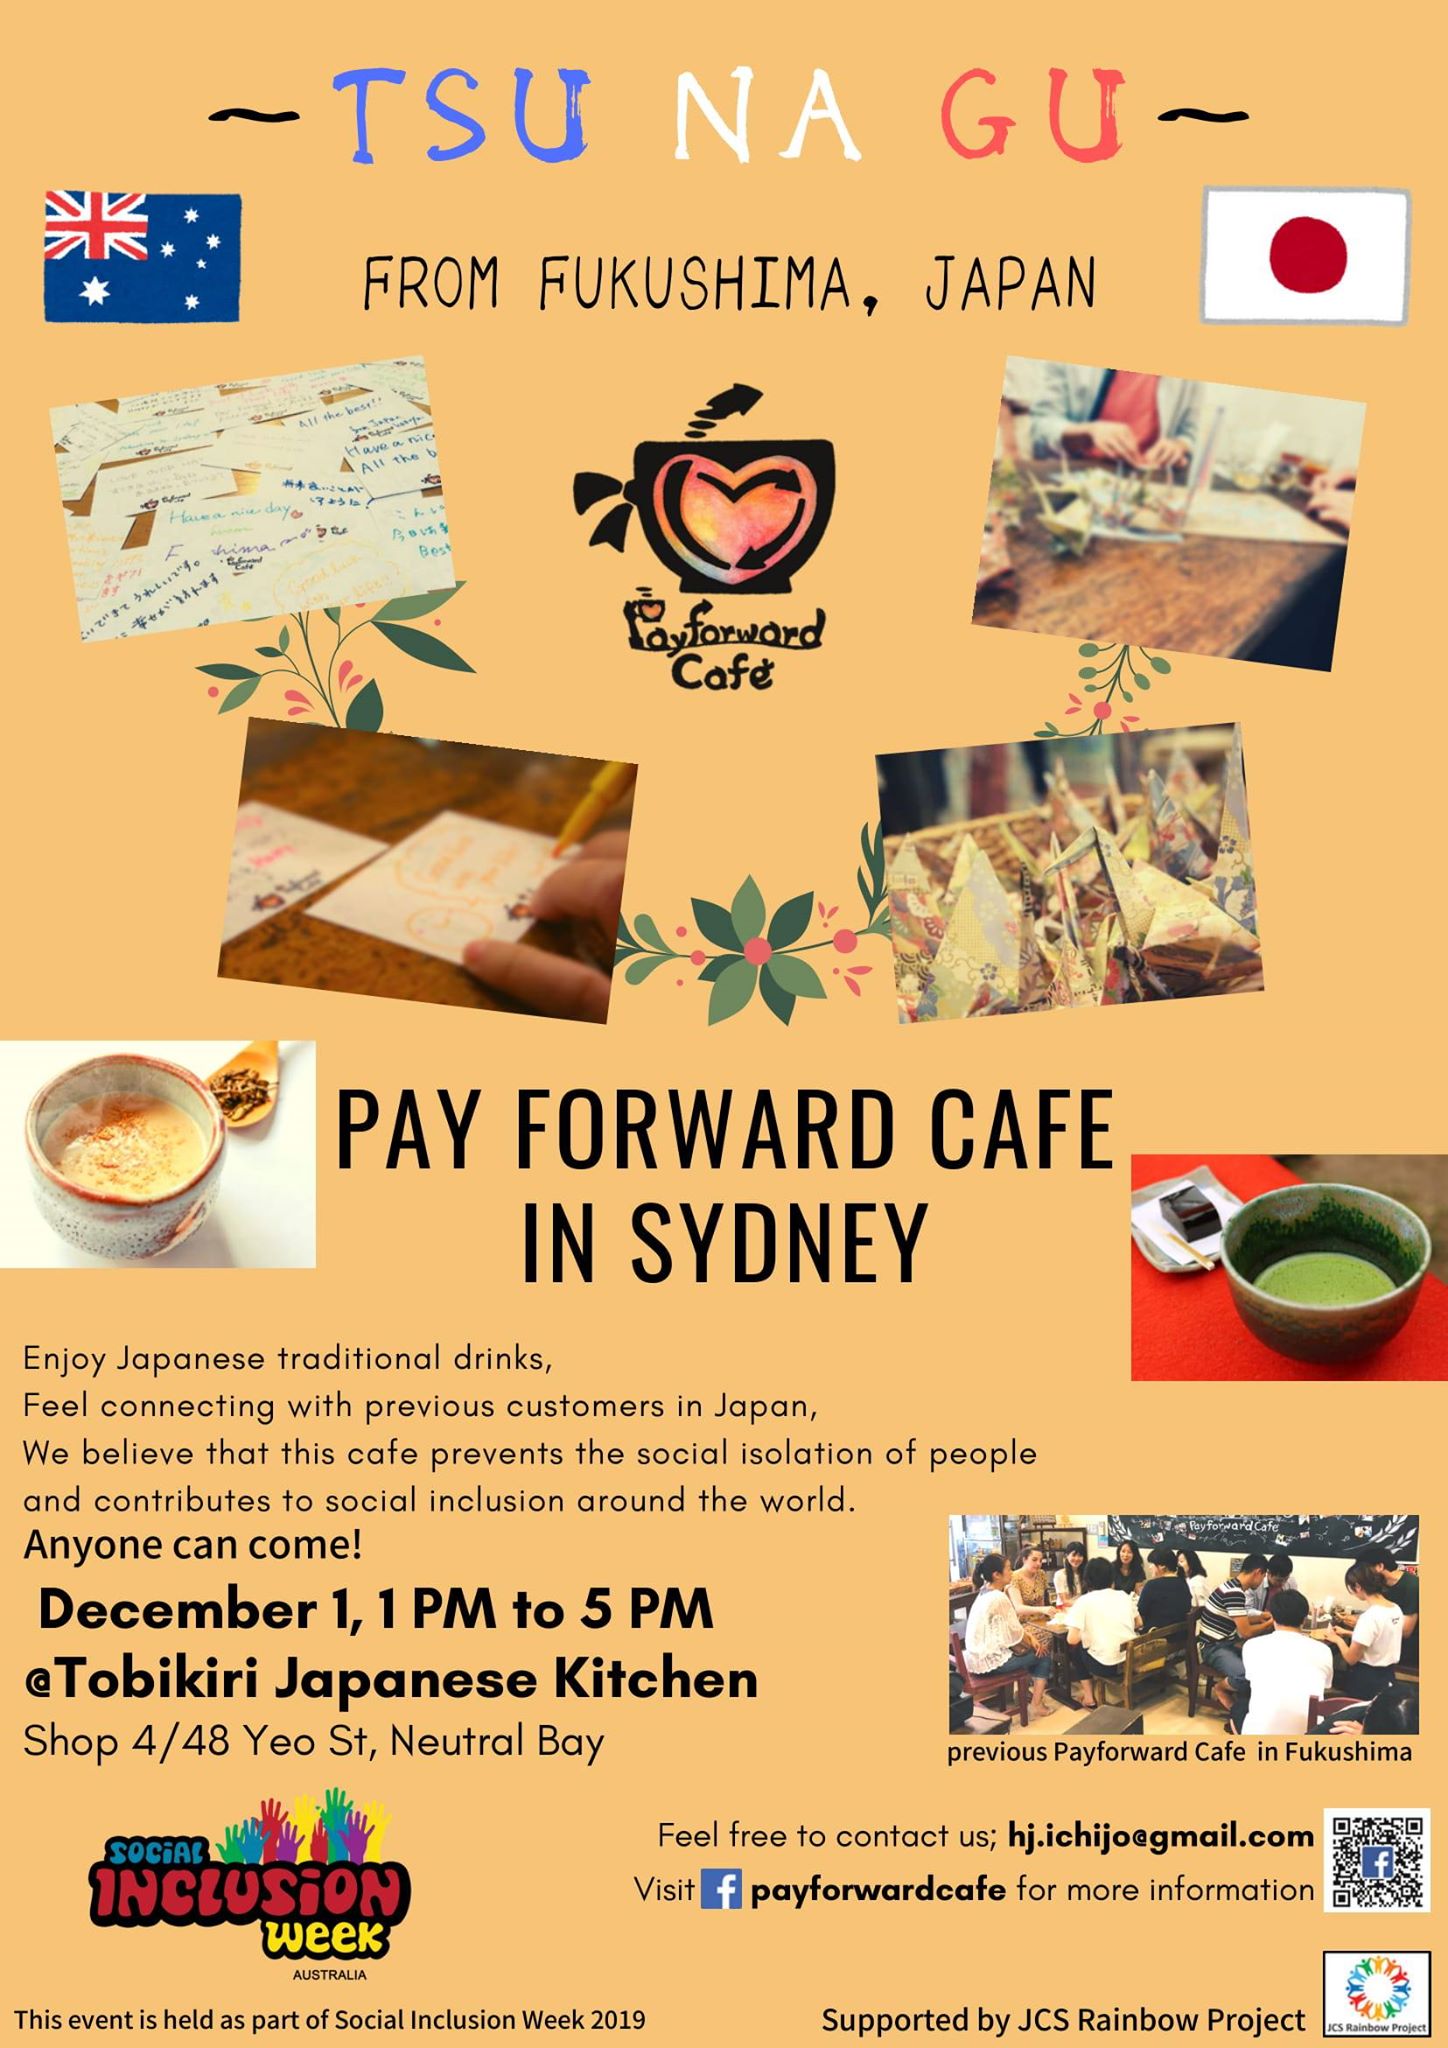 Pay it Forward cafe from Fukushima